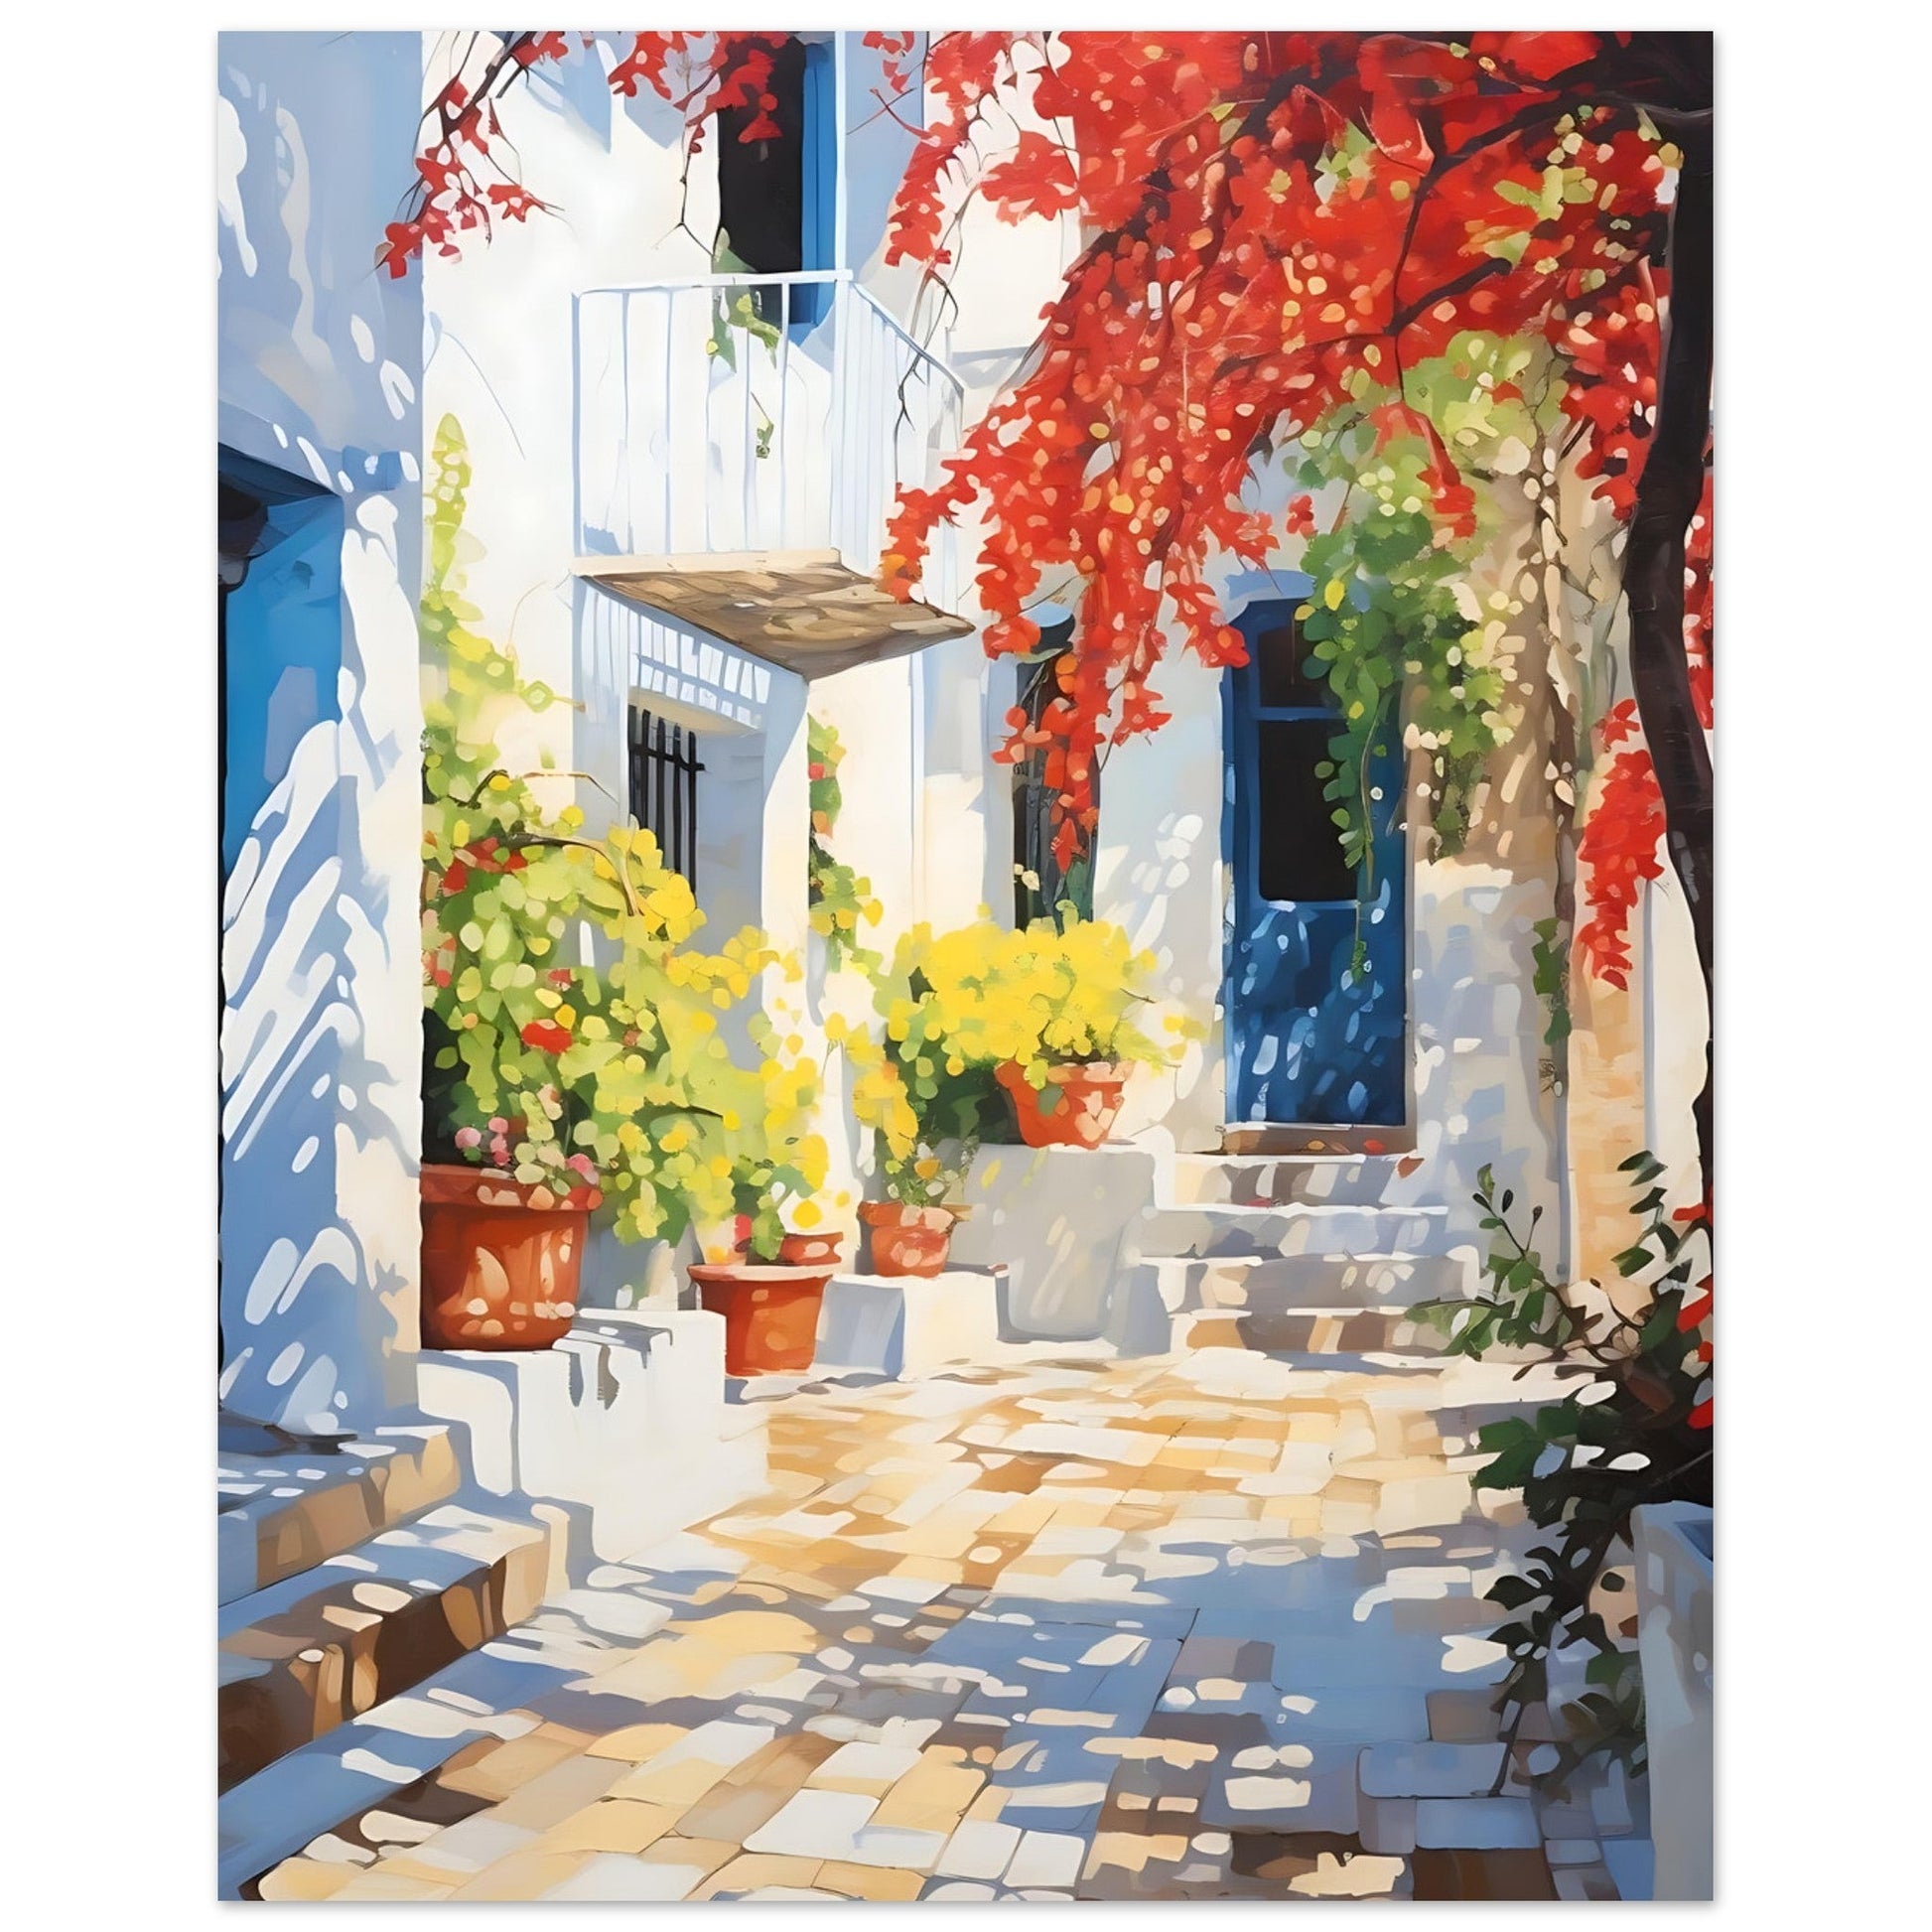 Greece Travel Print - Mediterranean Courtyard, bougainvillea, Mediterranean art print, Travel Poster, #illieeart #